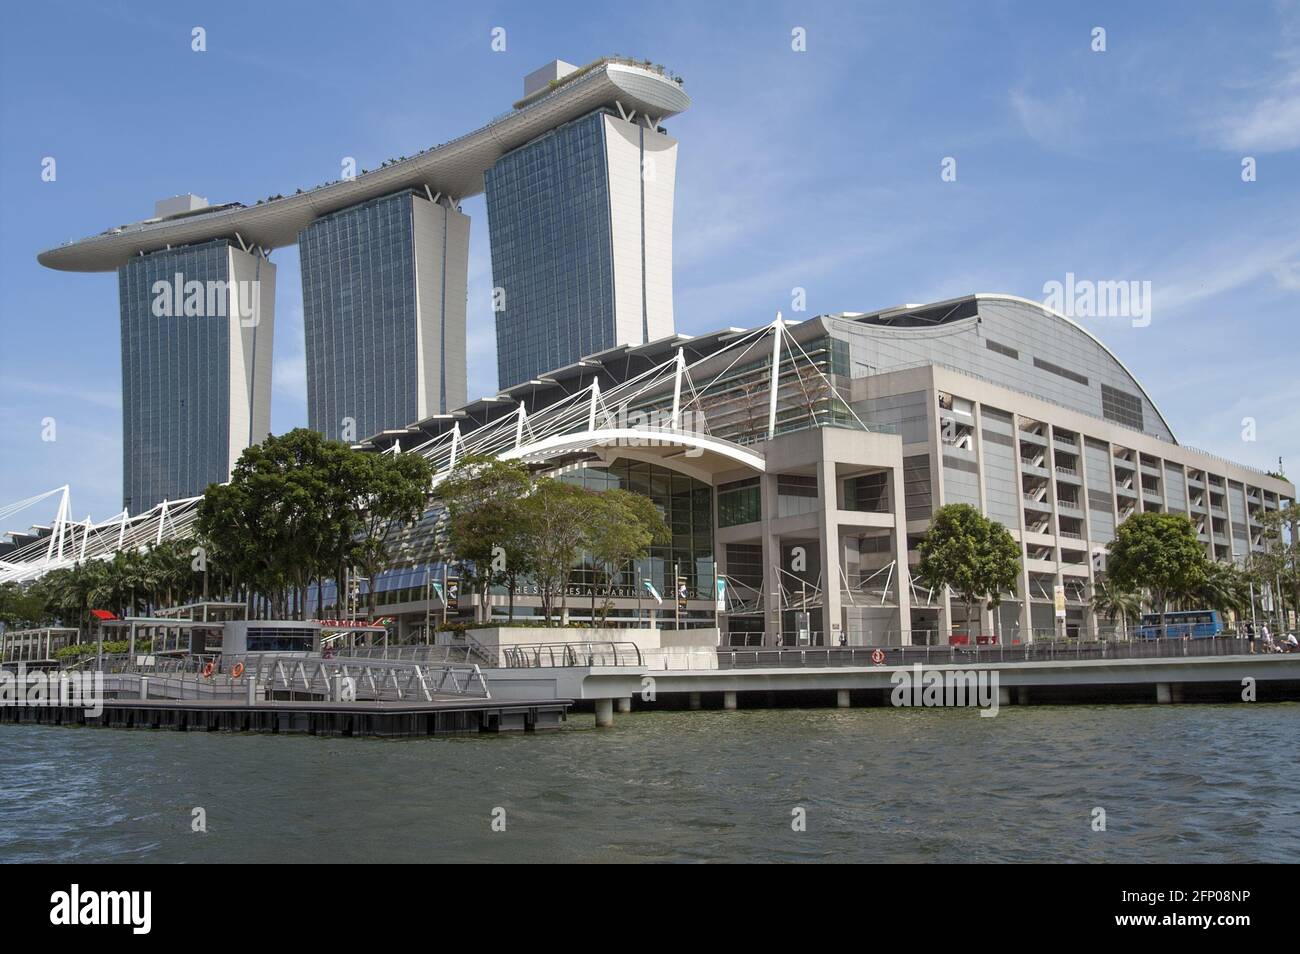 Singapore, Singapur, Asia, Asien; Luxury Marina Bay Sands Hotel and Casino; Luxuriöses Hotel und Casino; 濱海灣金沙酒店 Luksushowy hotel i kasyno Foto Stock